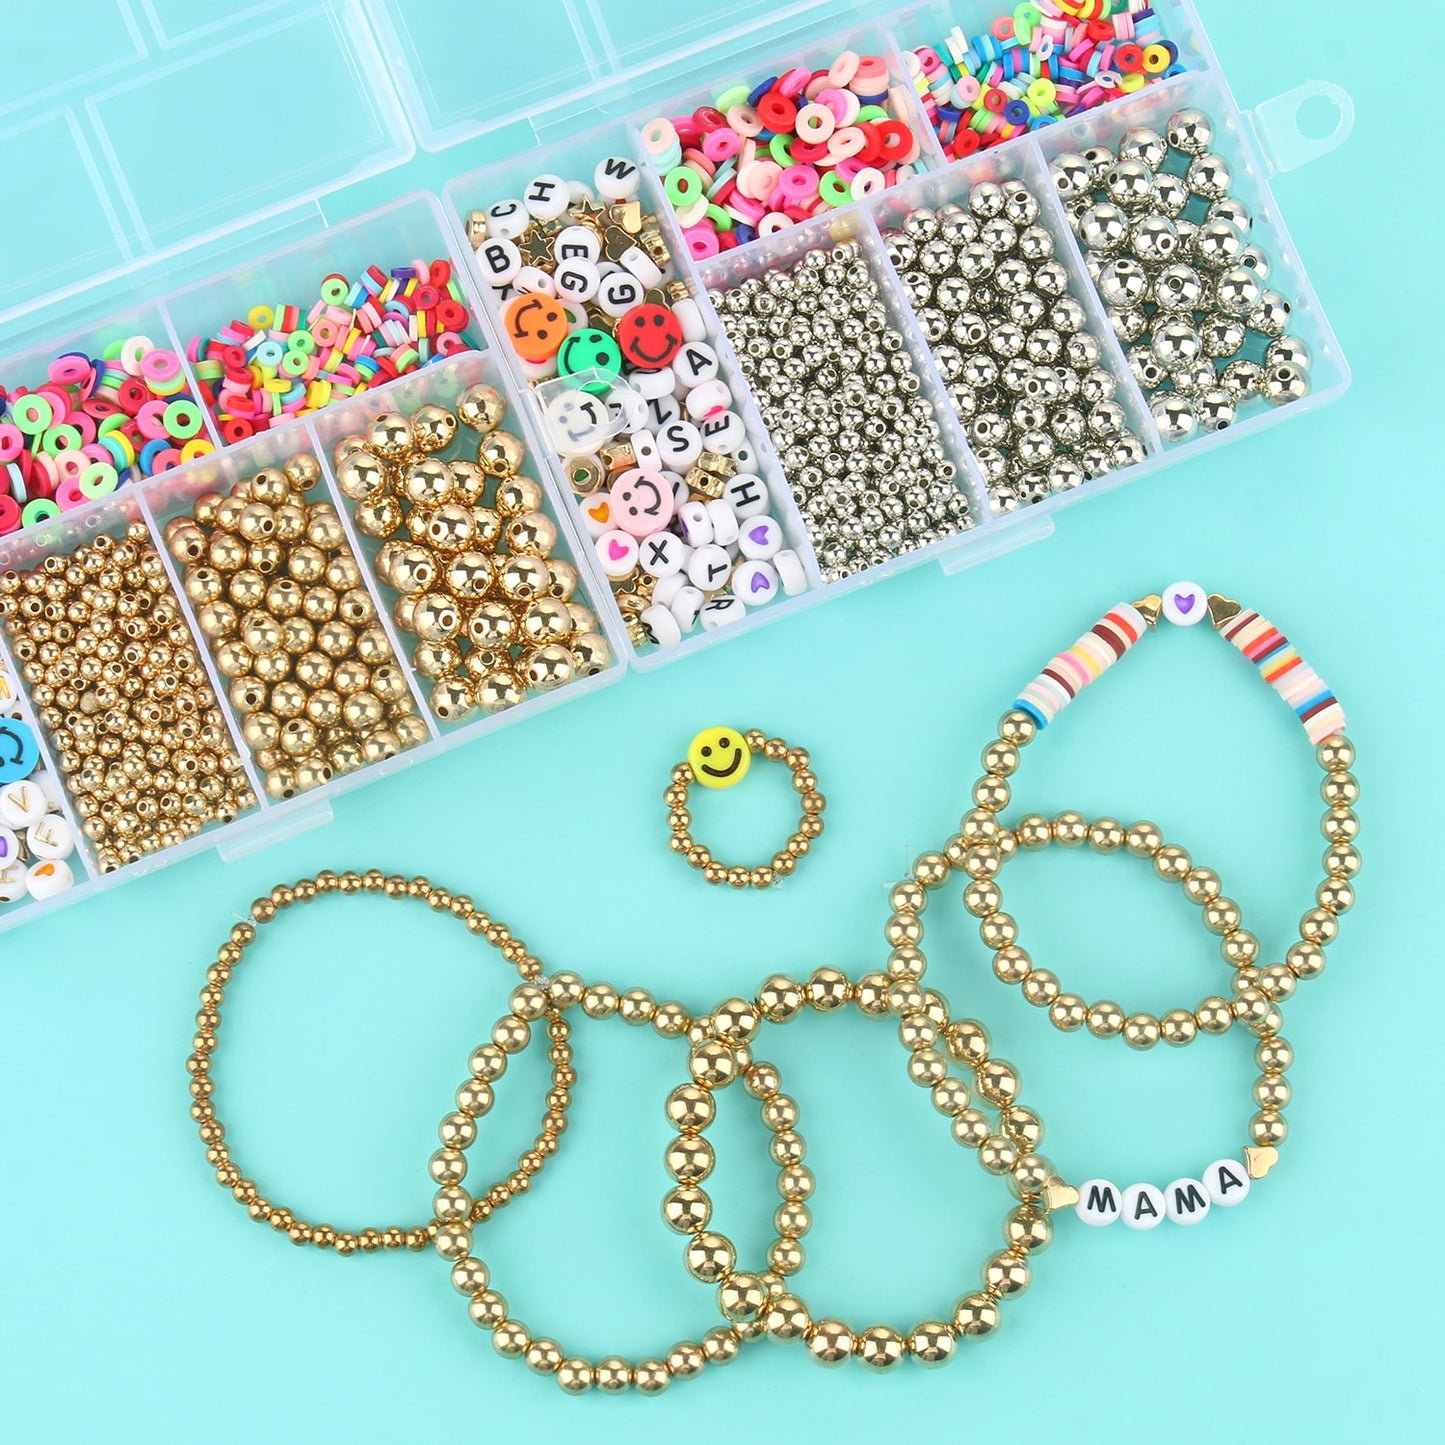 Generic Polymer Beads For Jewelry Bracelet Making Kit Styles Preppy Beads  DIY @ Best Price Online